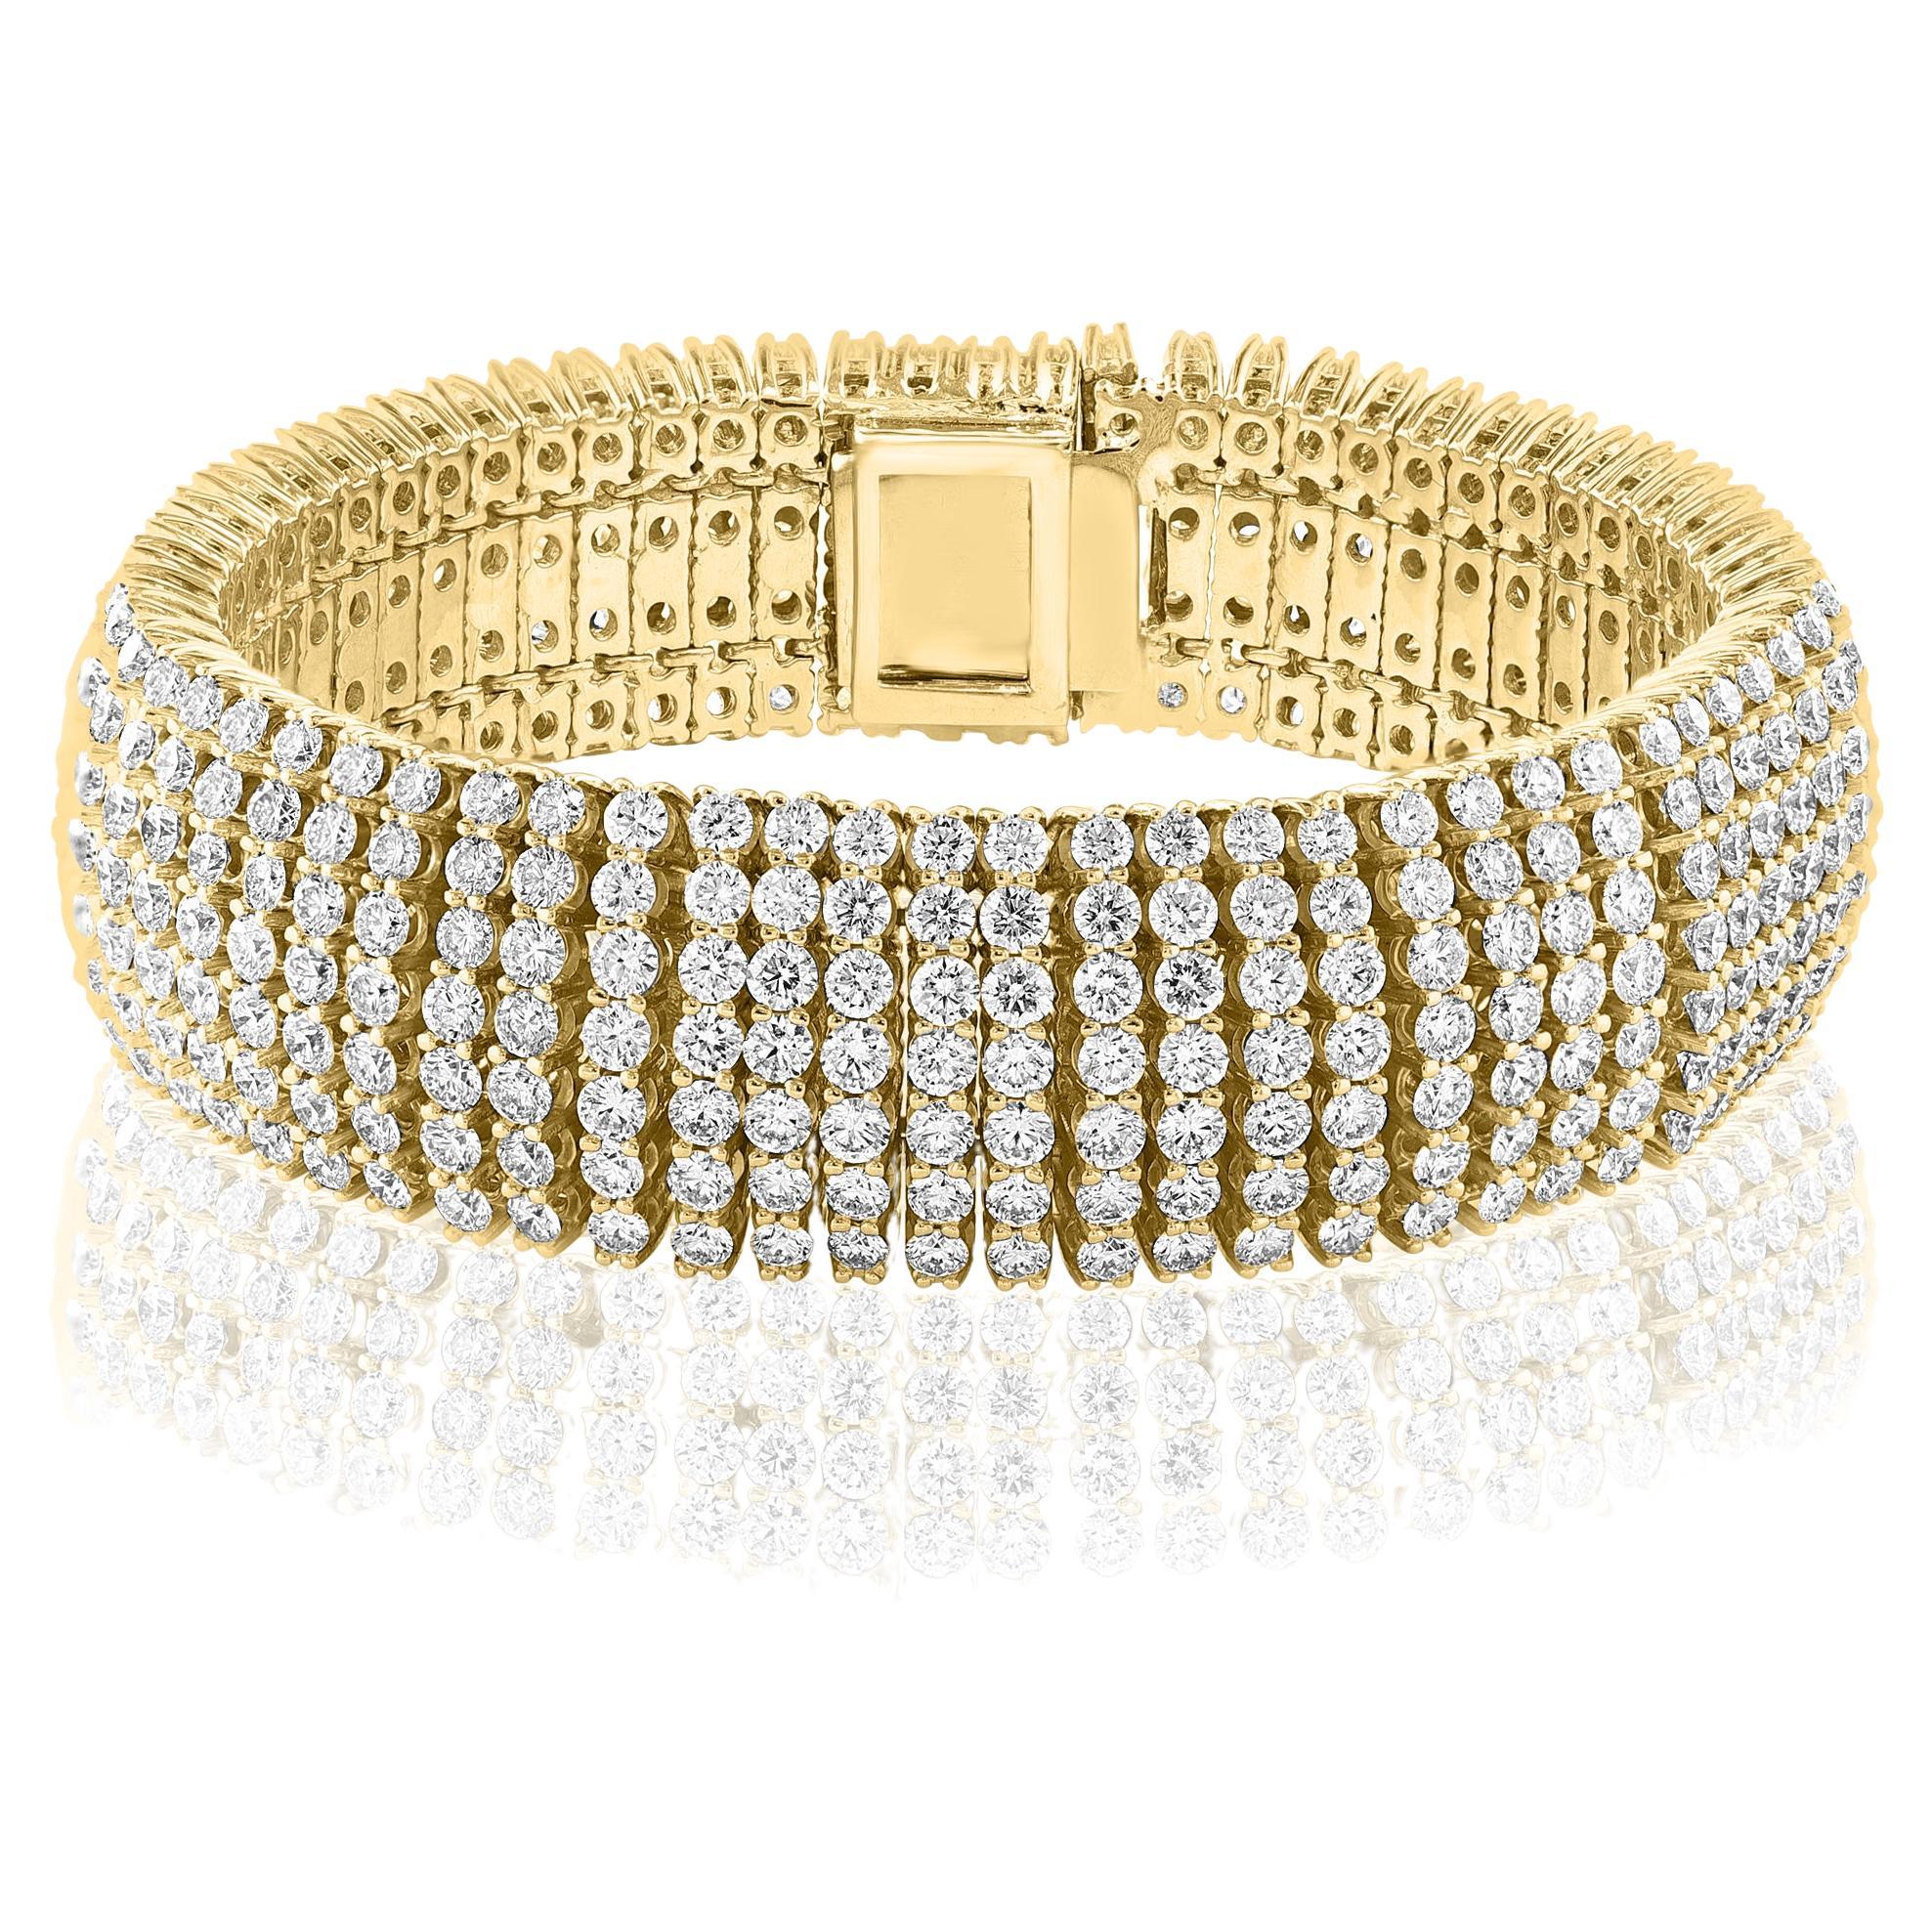 30.18 Carat Round Diamond Multi-Row Tennis Bracelet in 14K Yellow Gold